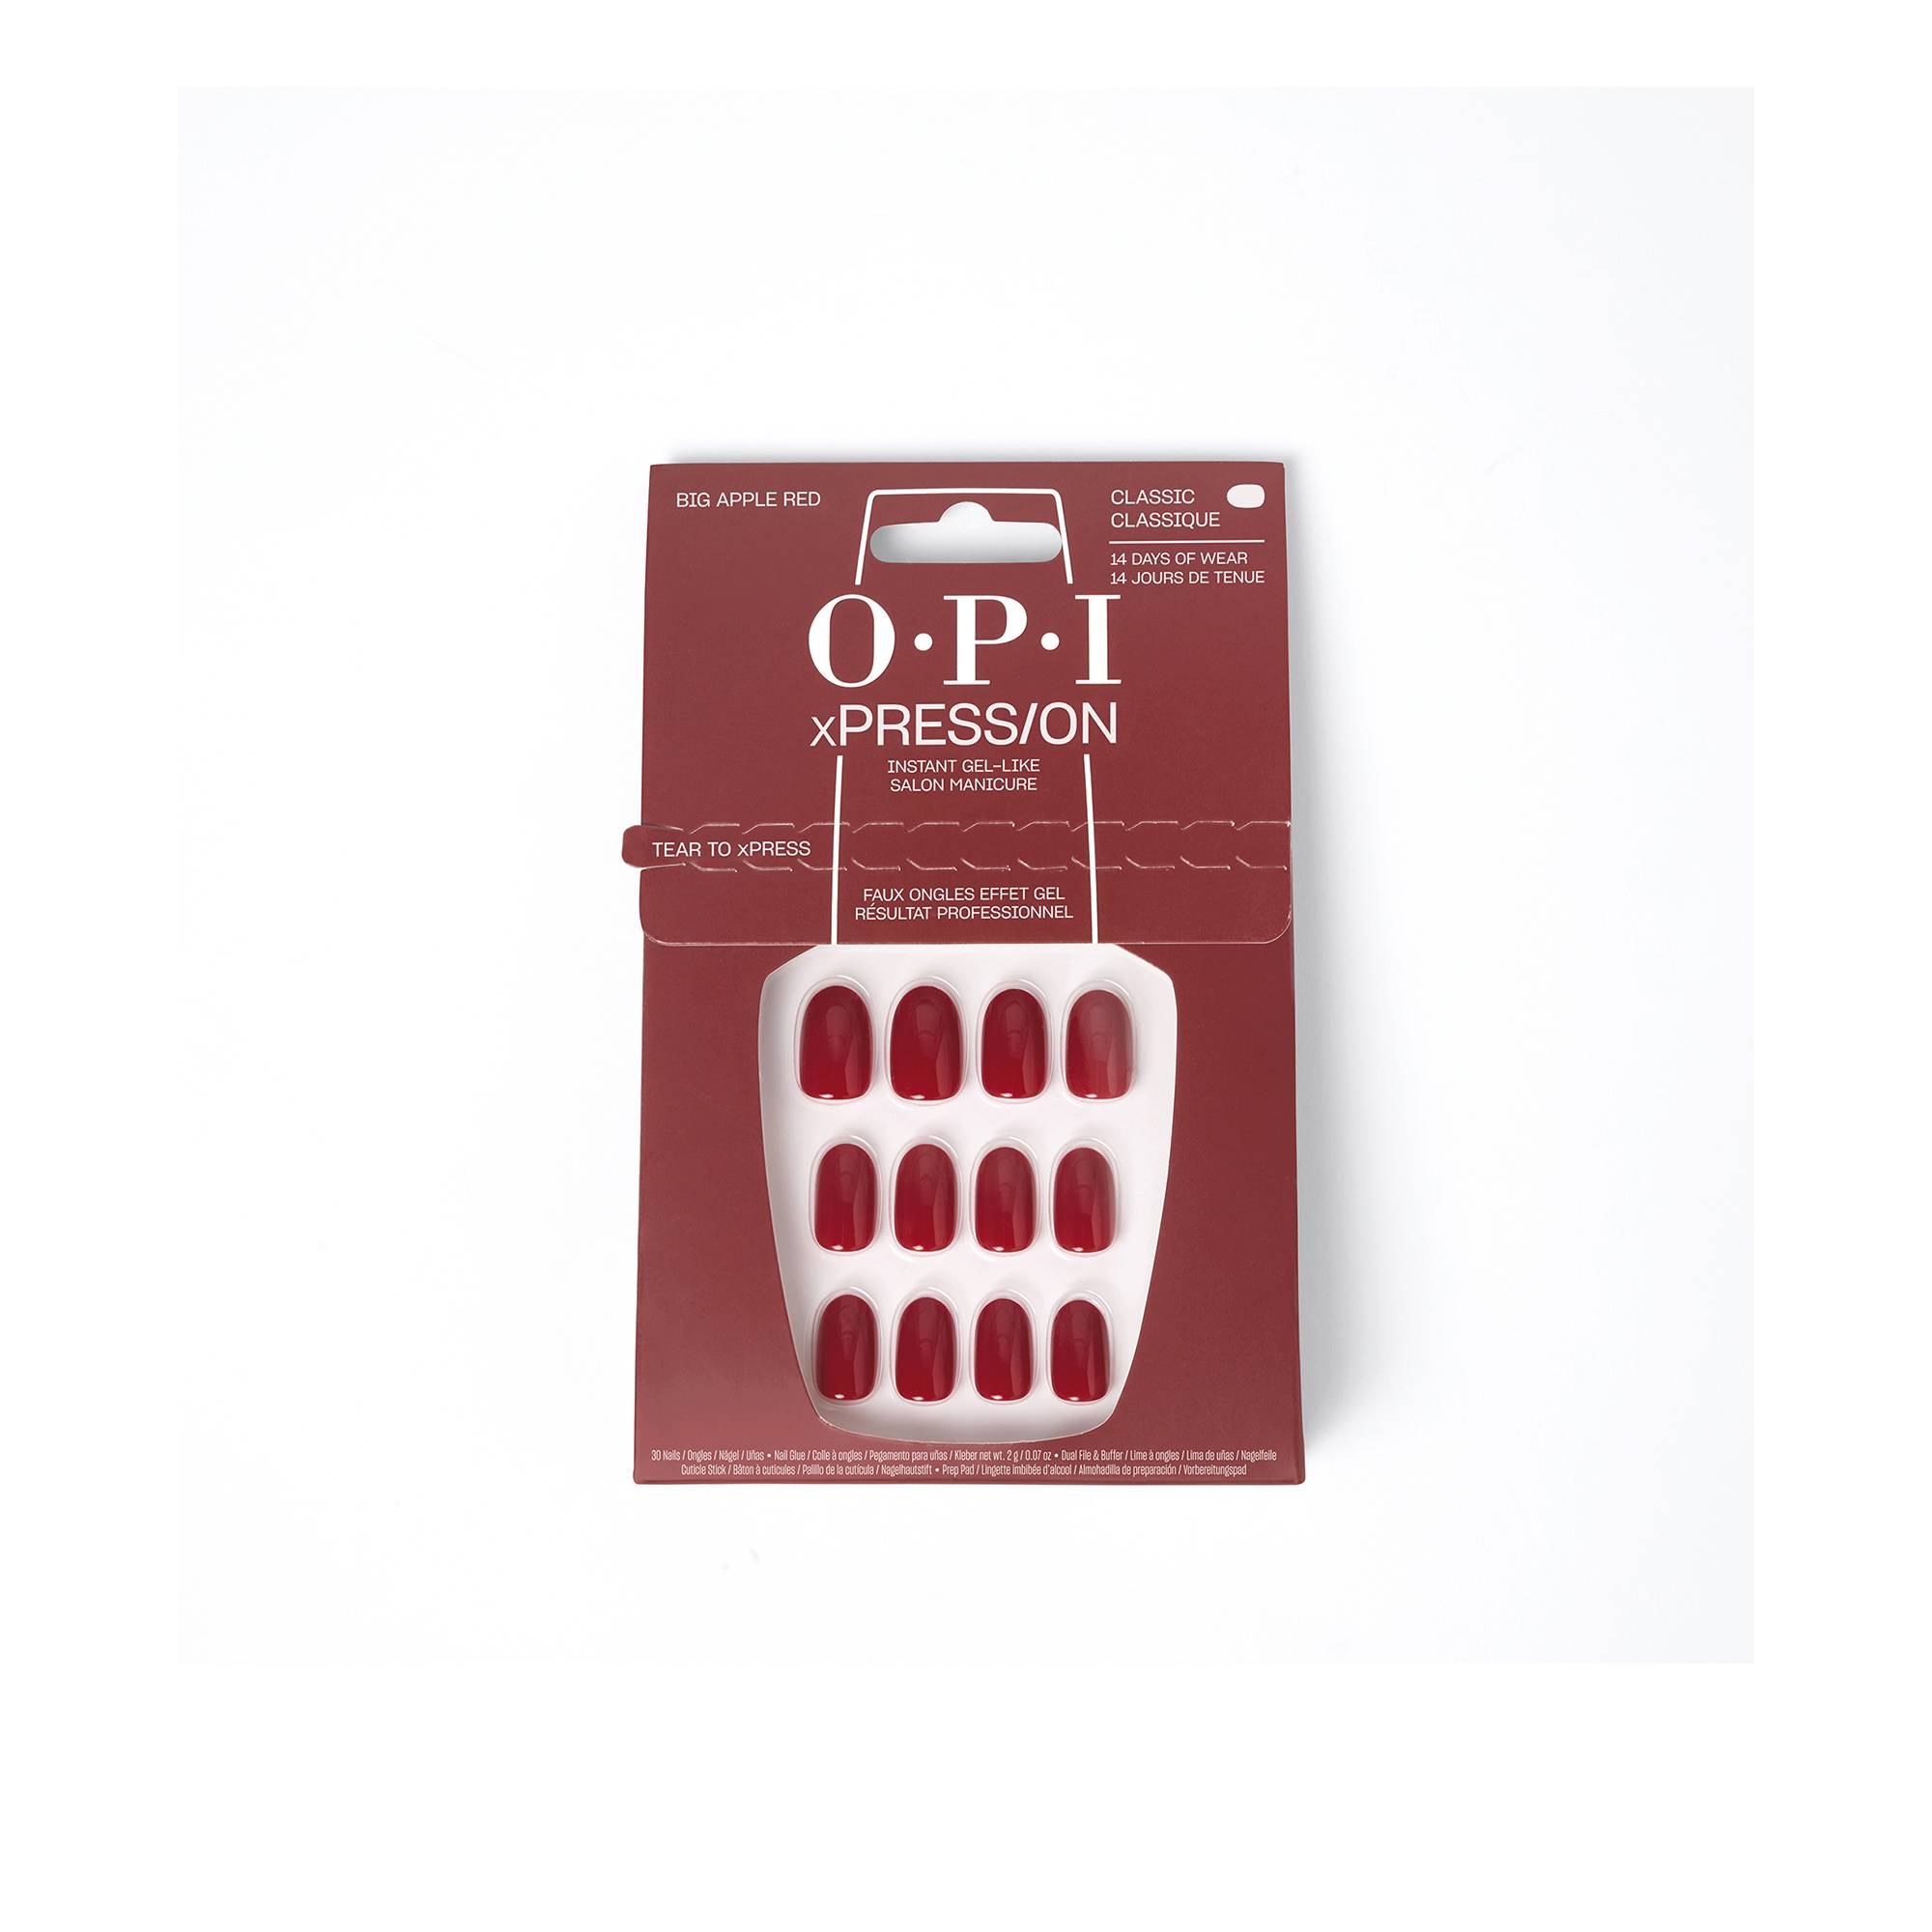 Faux-ongles xPRESS/ON - Big Apple Red™ de la marque OPI Contenance 2g - 1